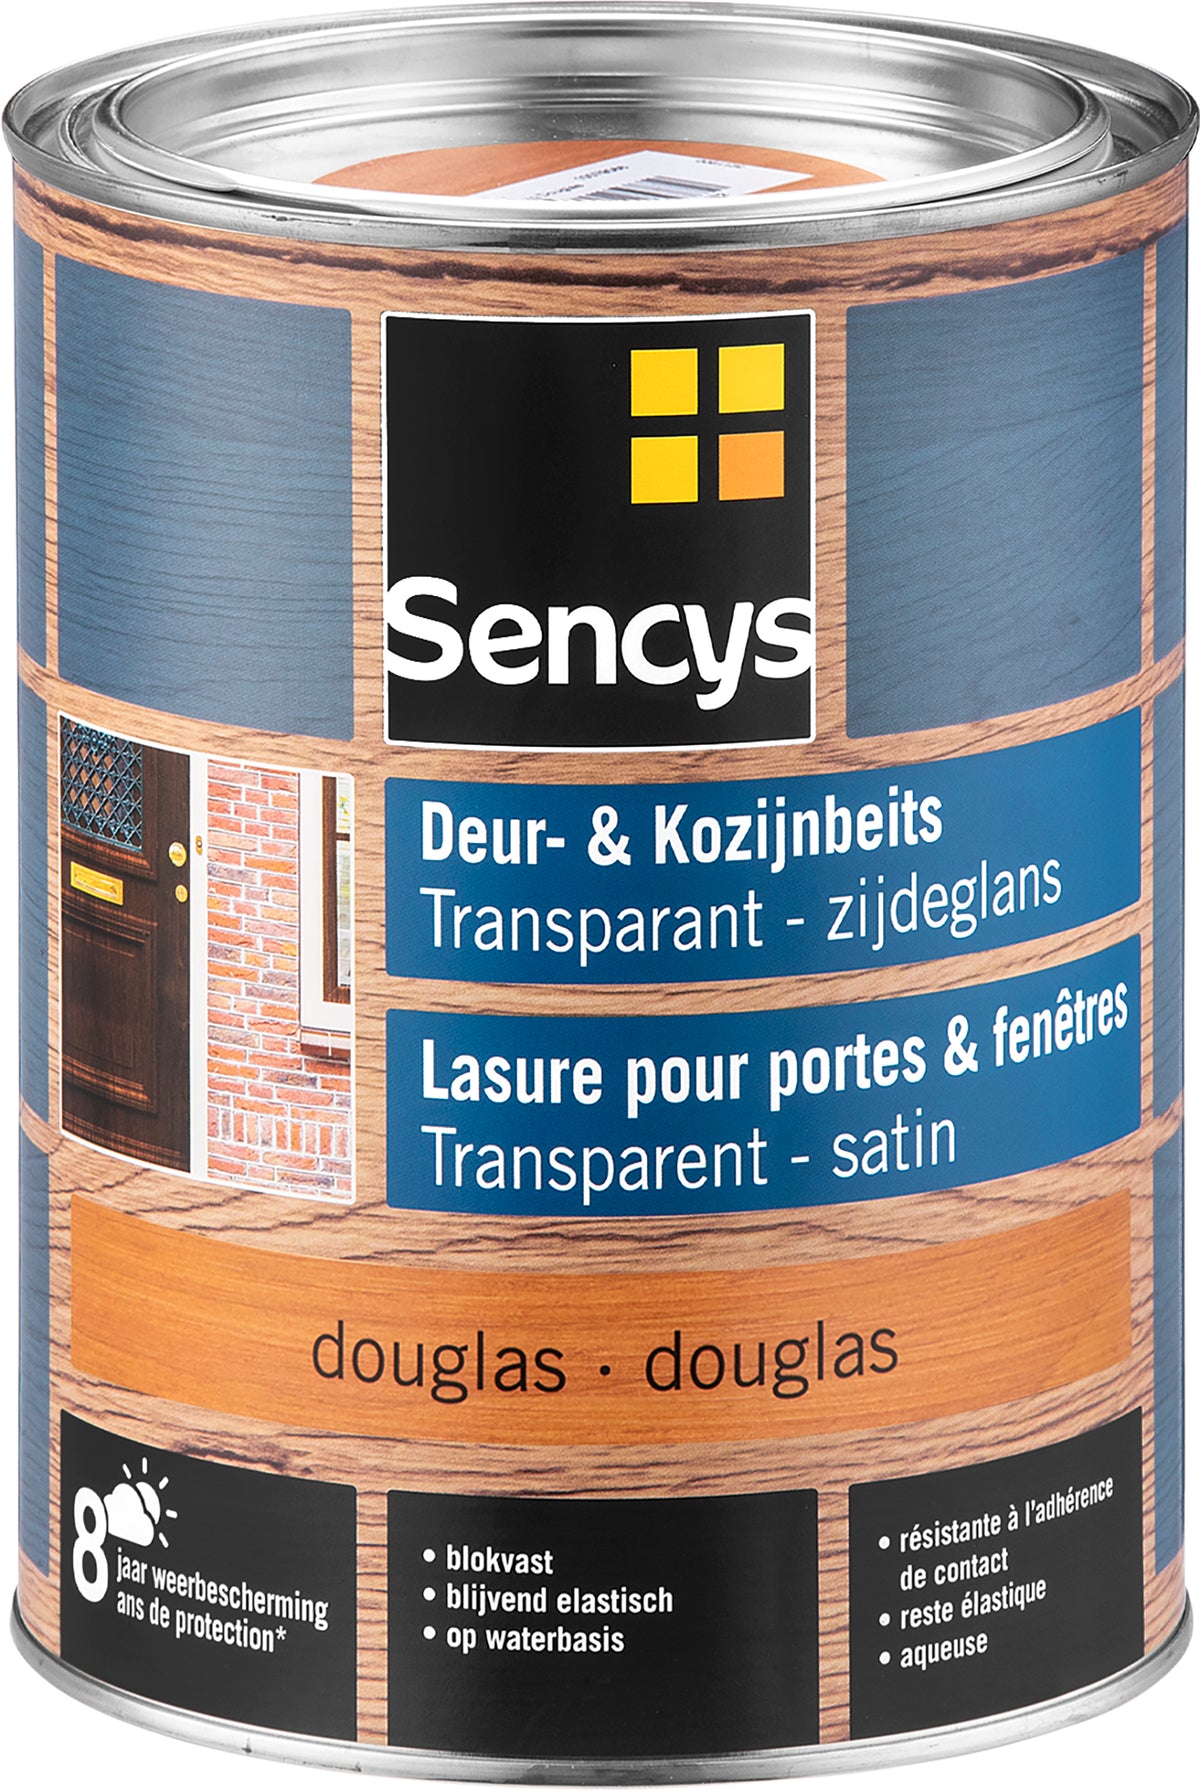 Sencys beits ramen en deuren semi-transparant zijdeglans douglas 2,5L